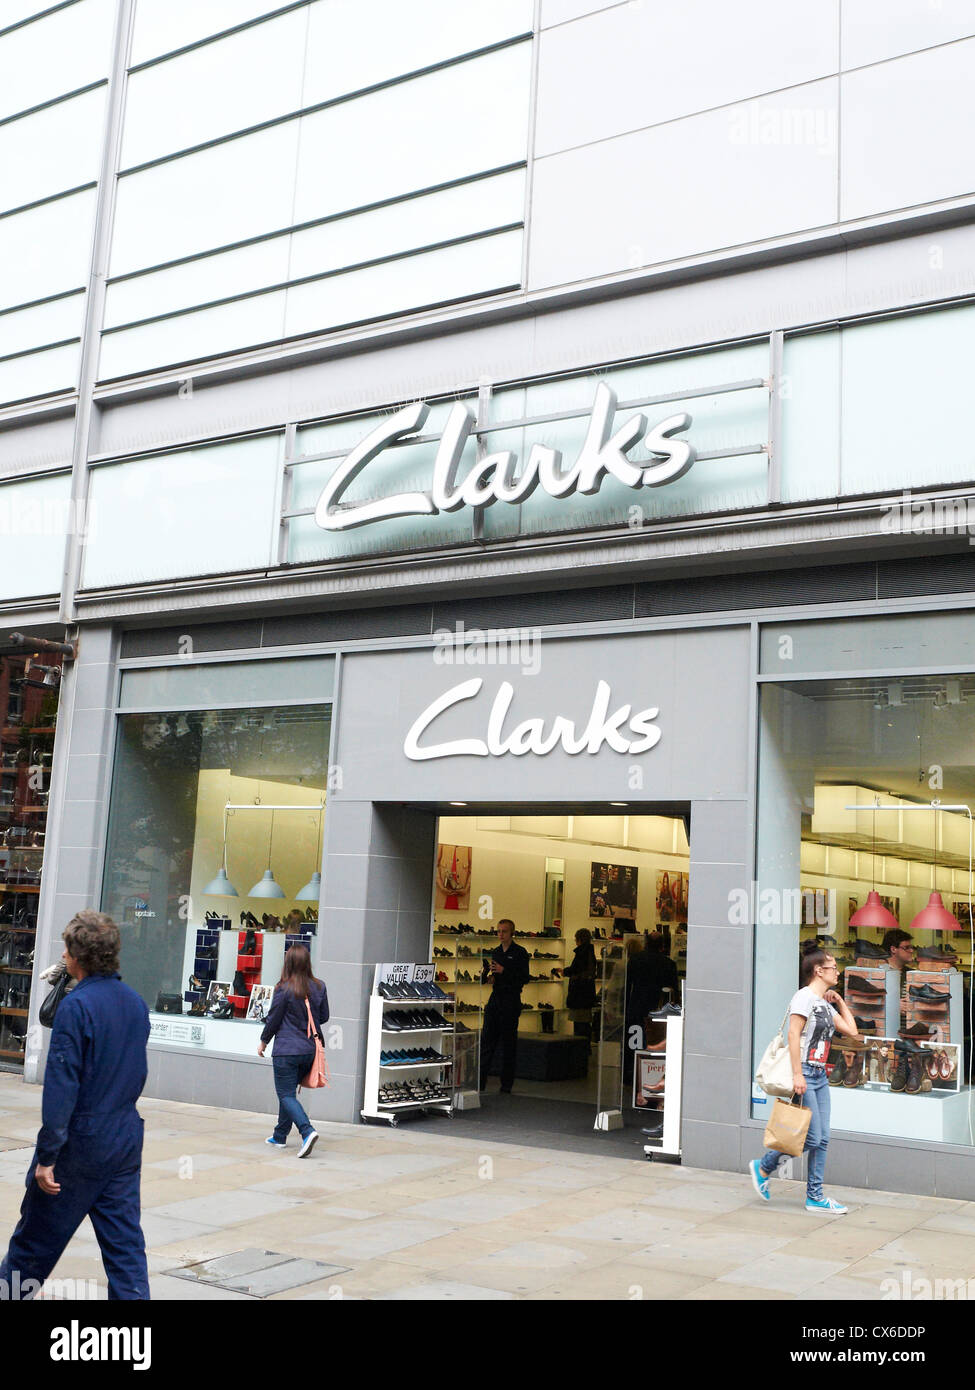 Clarks shop on Market Street Manchester UK Stock Photo